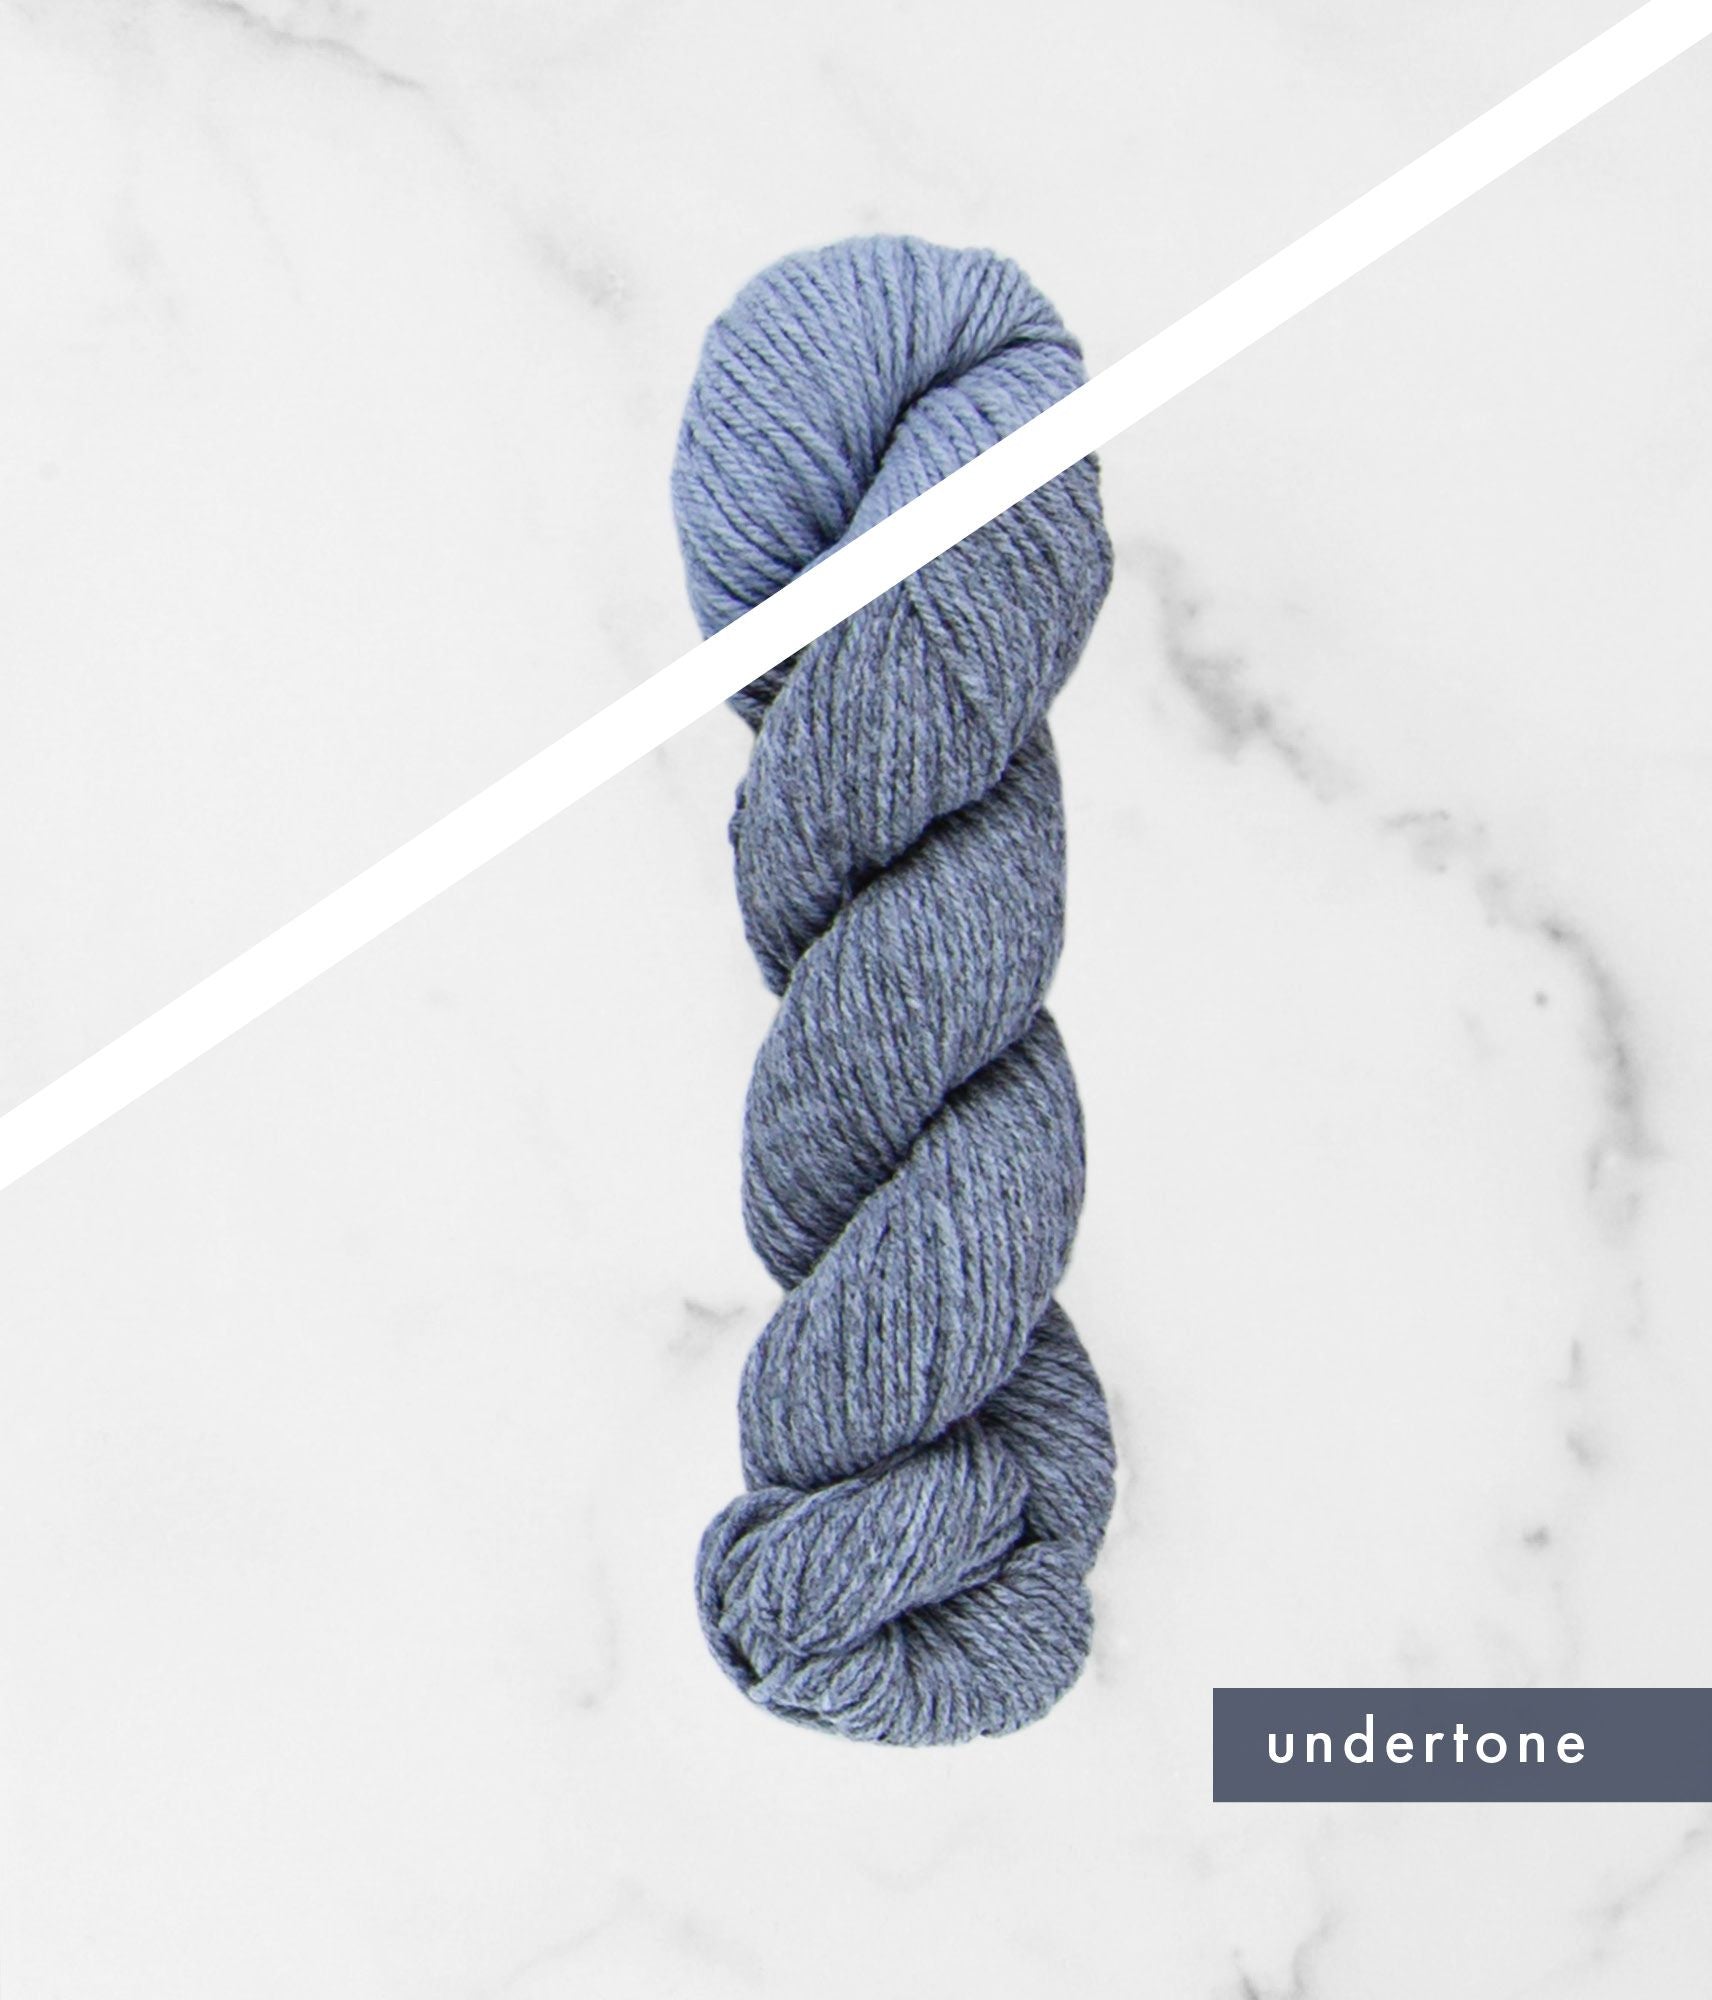 Lavender overtone and undertone BT Tones hanks of yarn